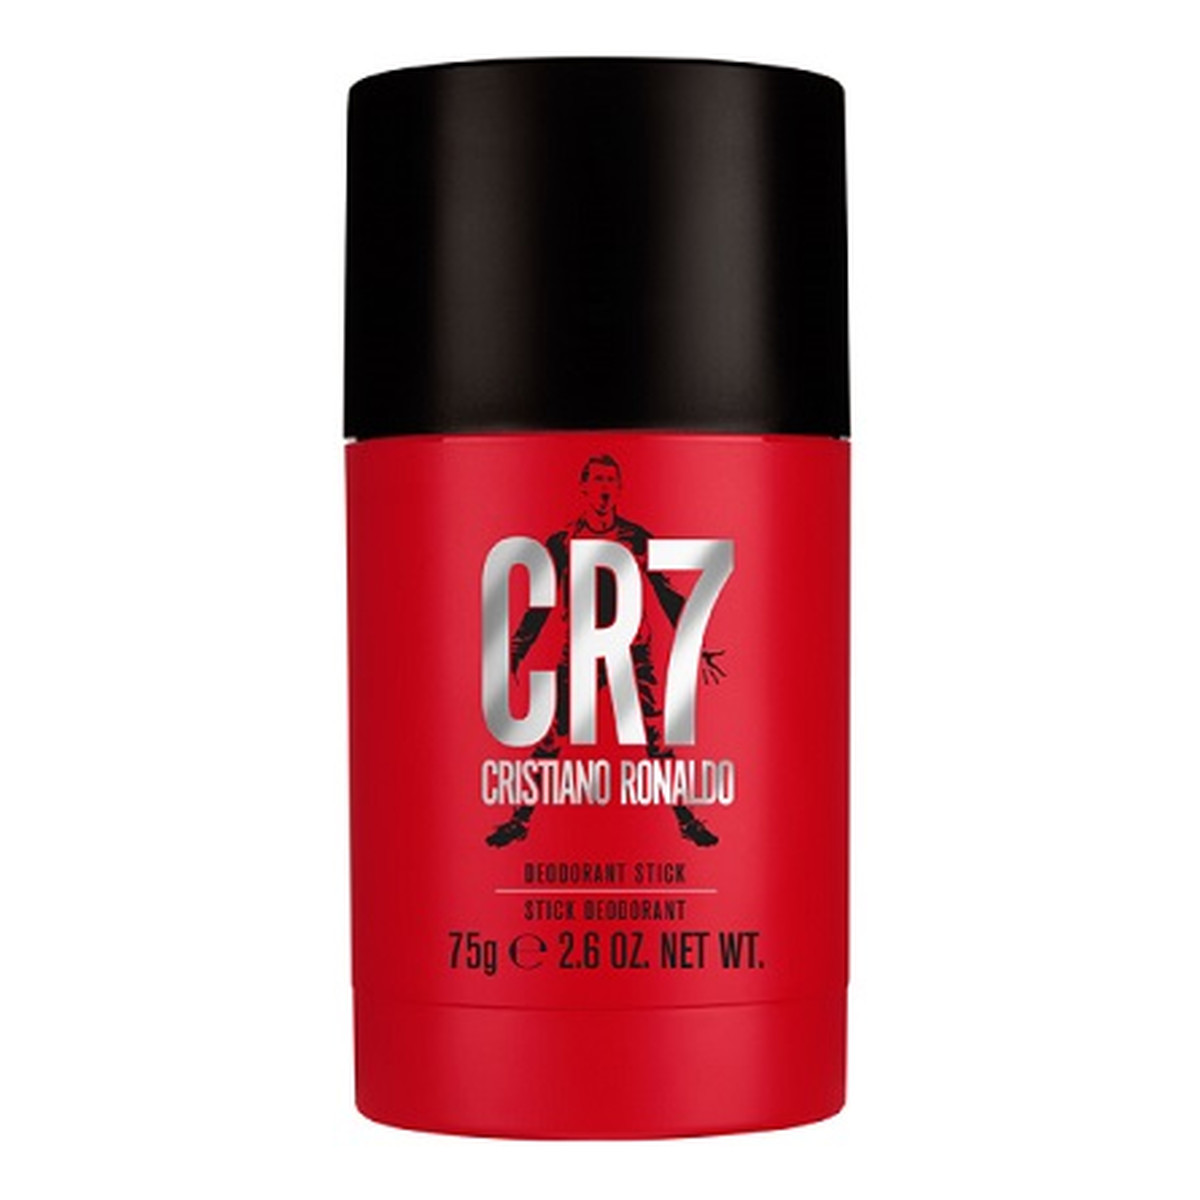 Cristiano Ronaldo CR7 dezodorant sztyft 75g